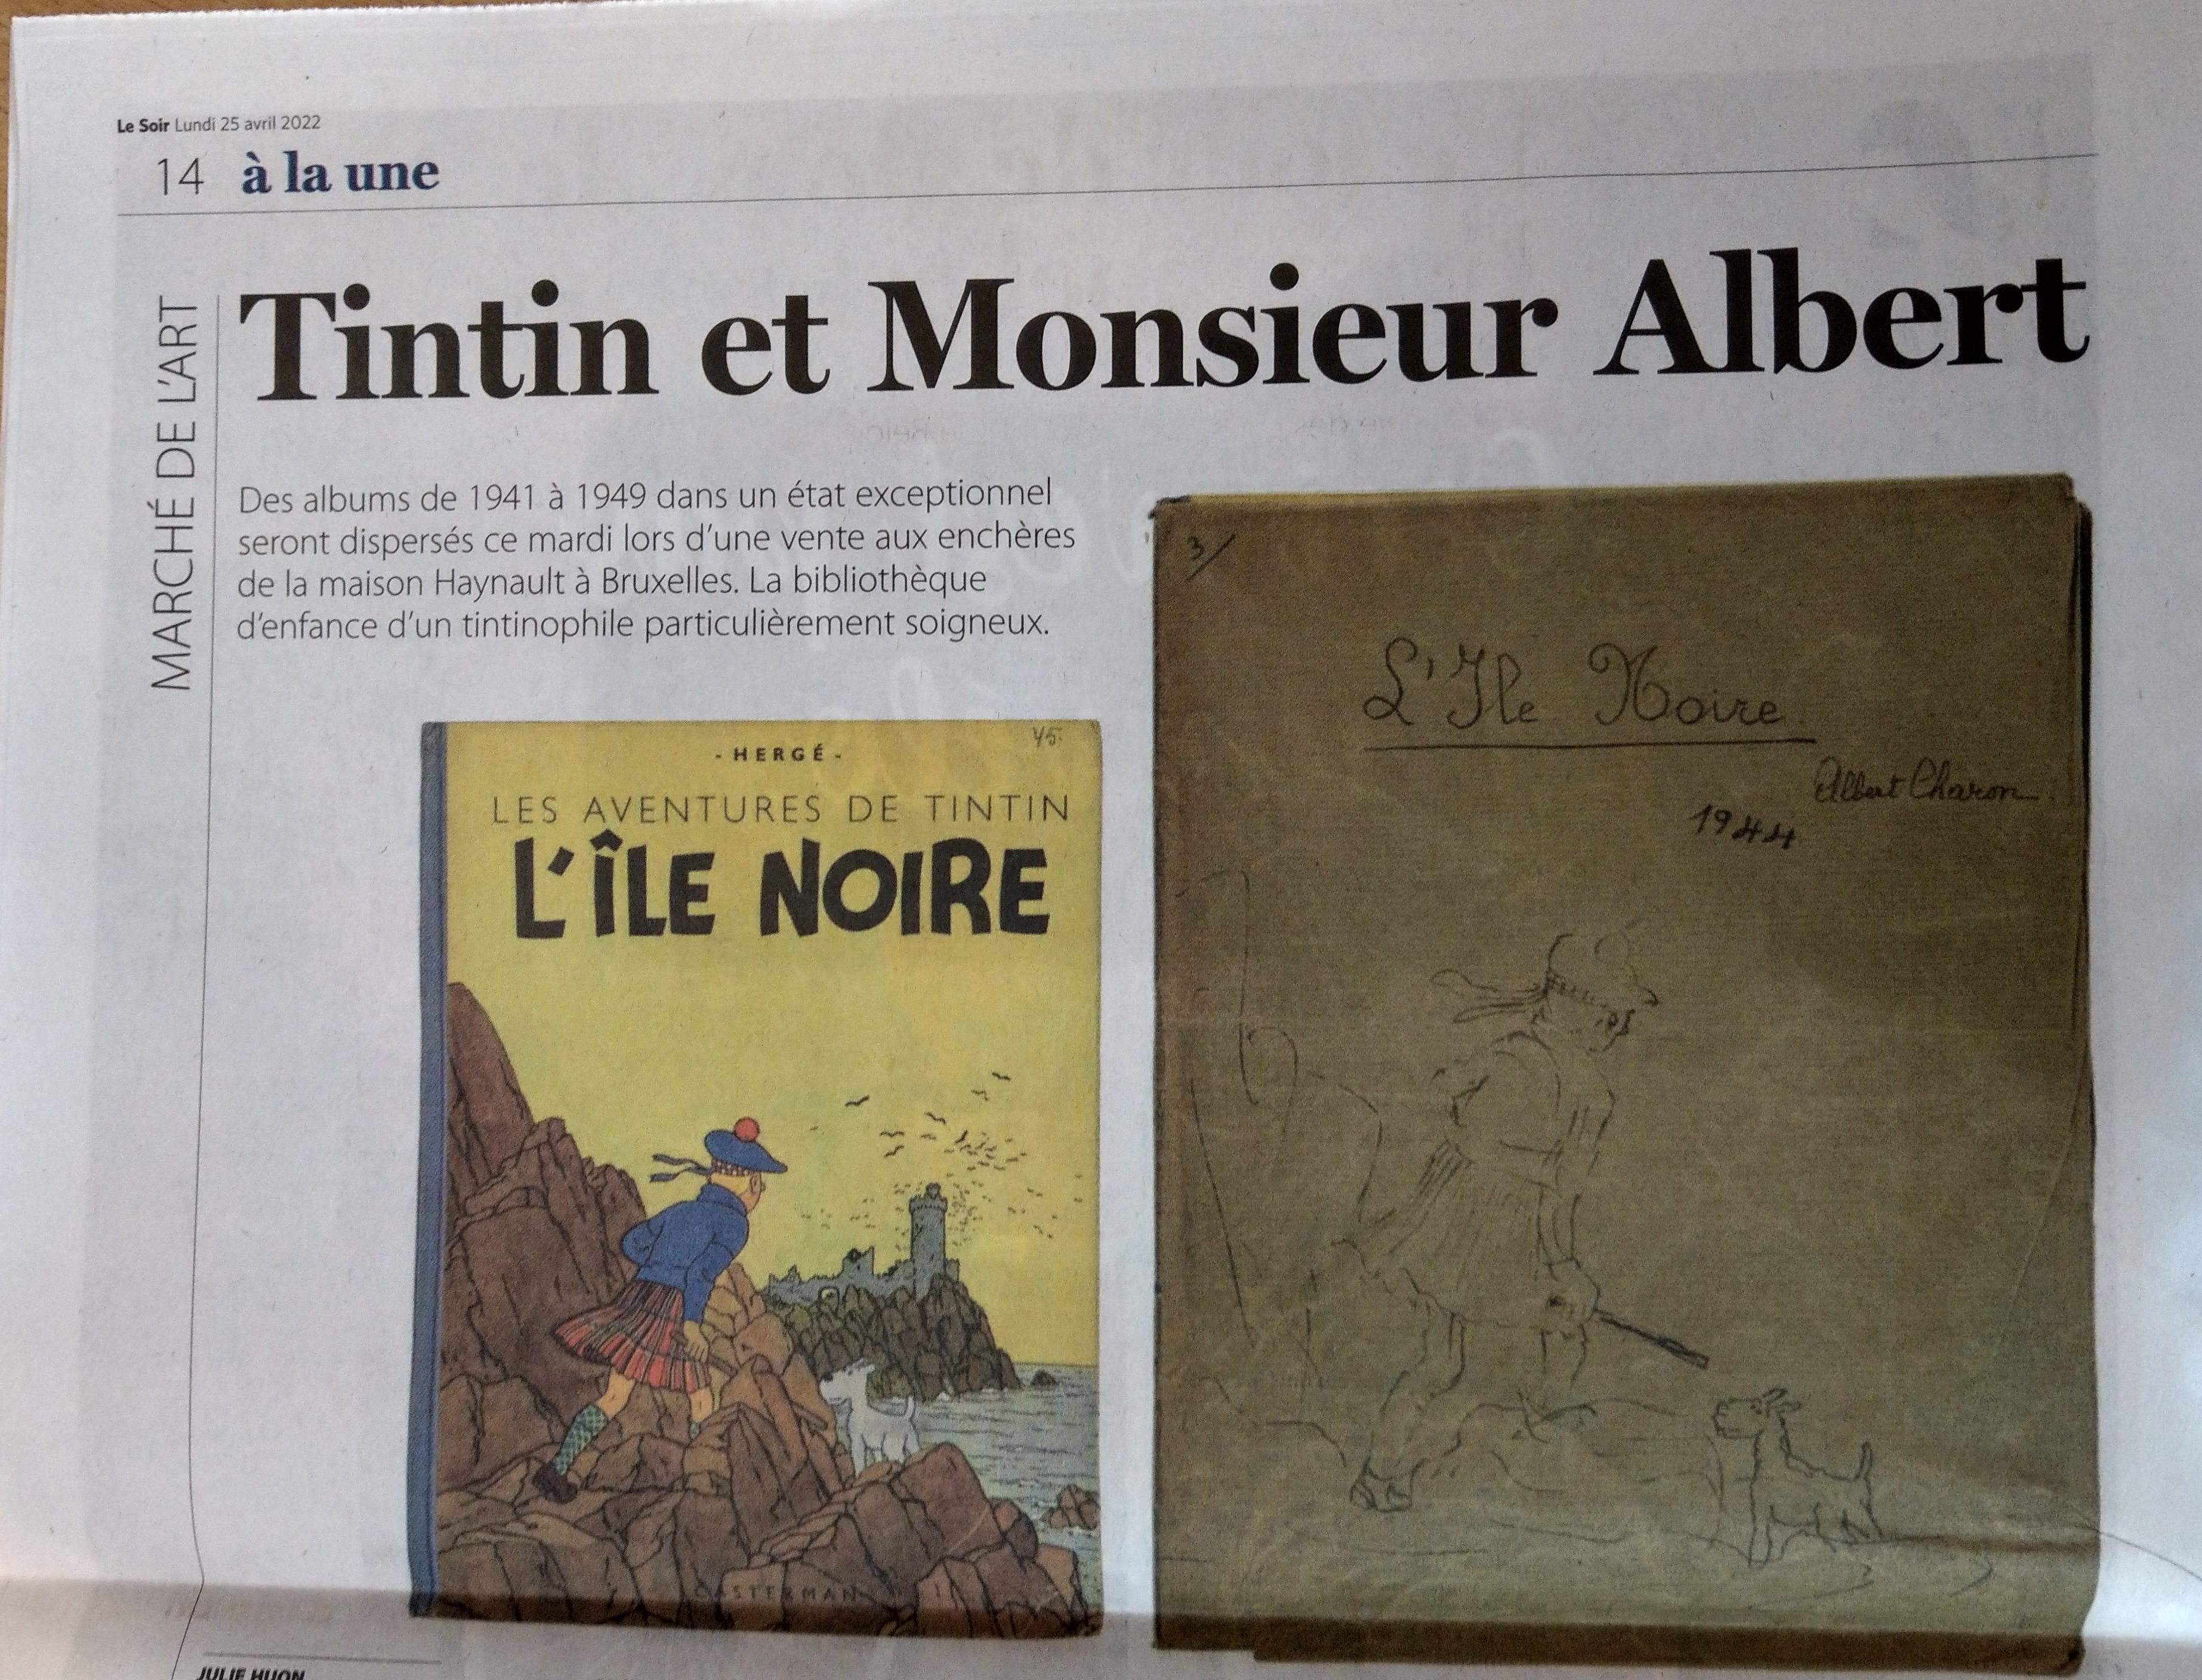 Tintin en Mr. Albert - Monday, April 25th 2022